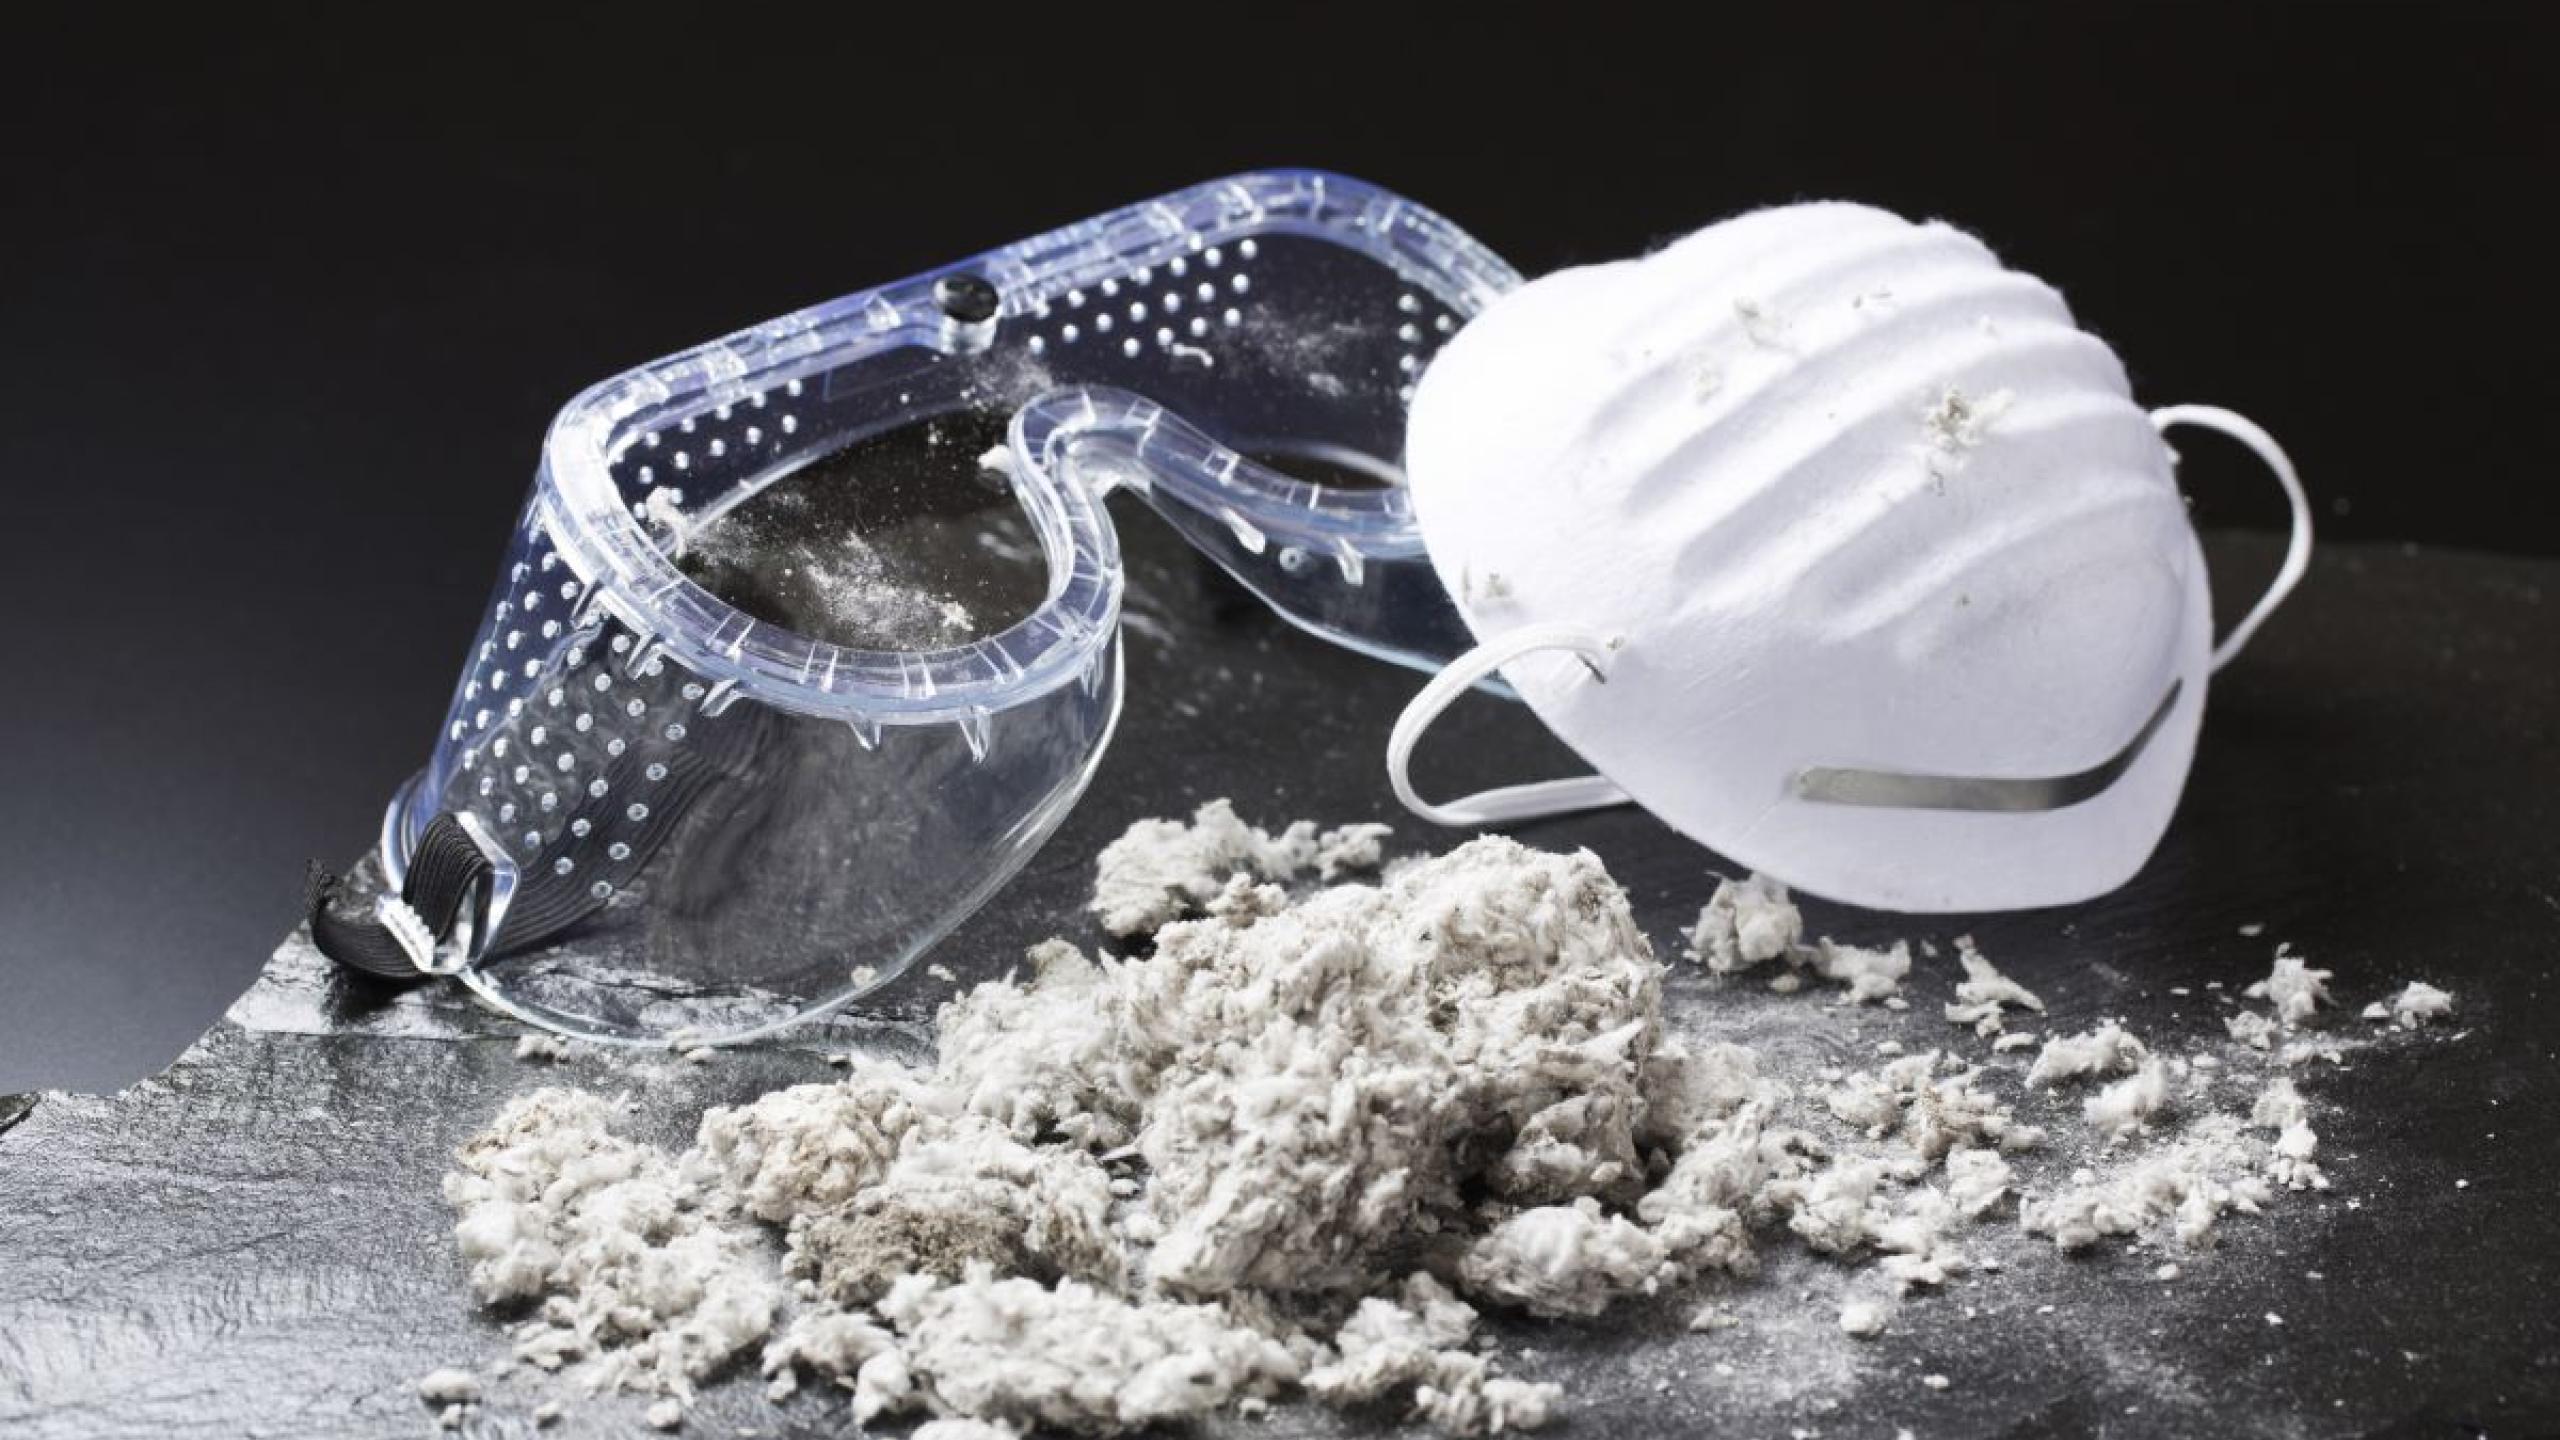 Veiligheidsbril en mondmasker naast vezelachtig materiaal (asbest)